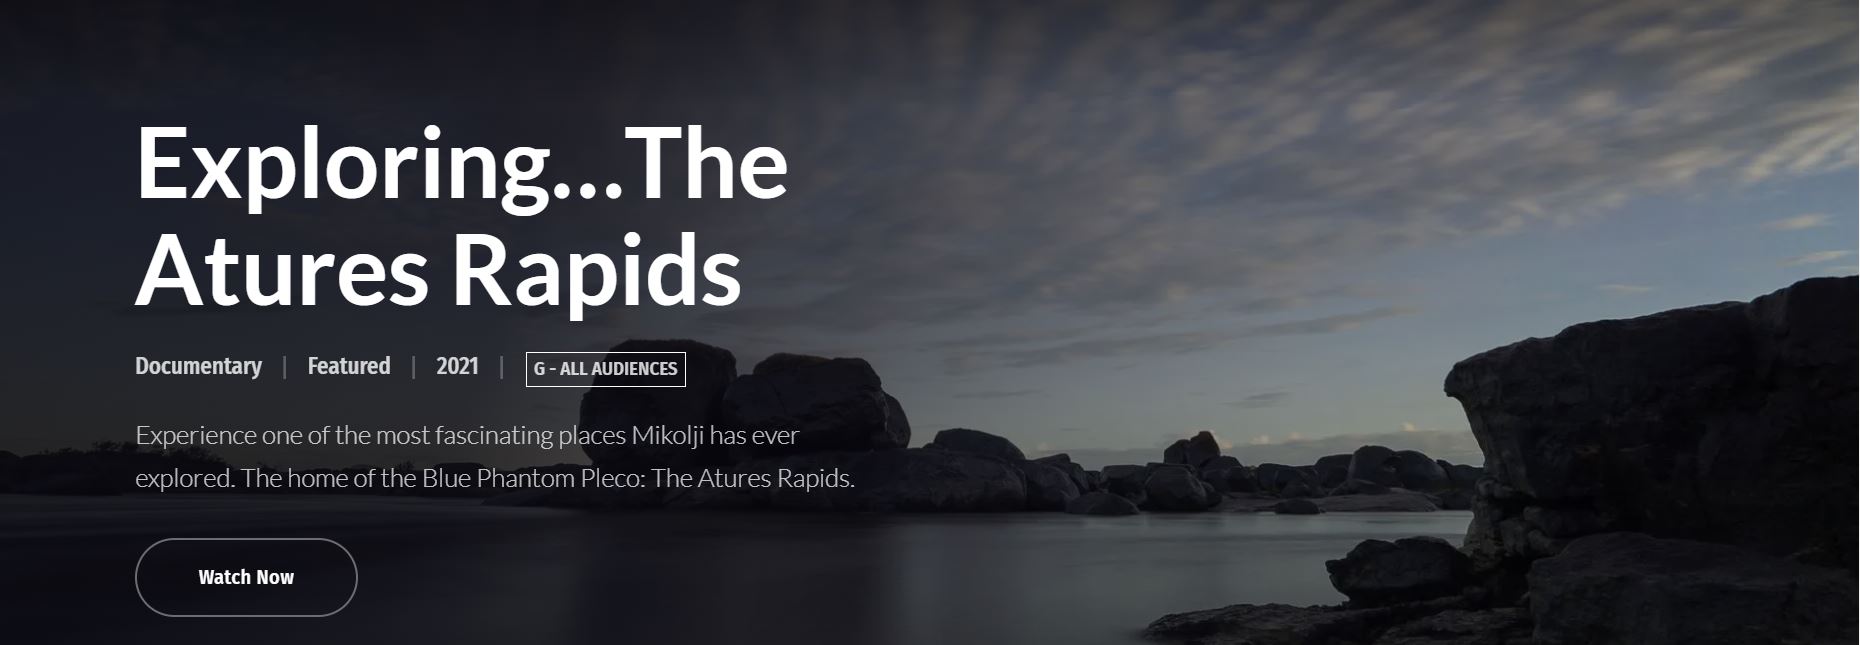 Presentation of Atures Rapids Documentary by Ivan Mikolji